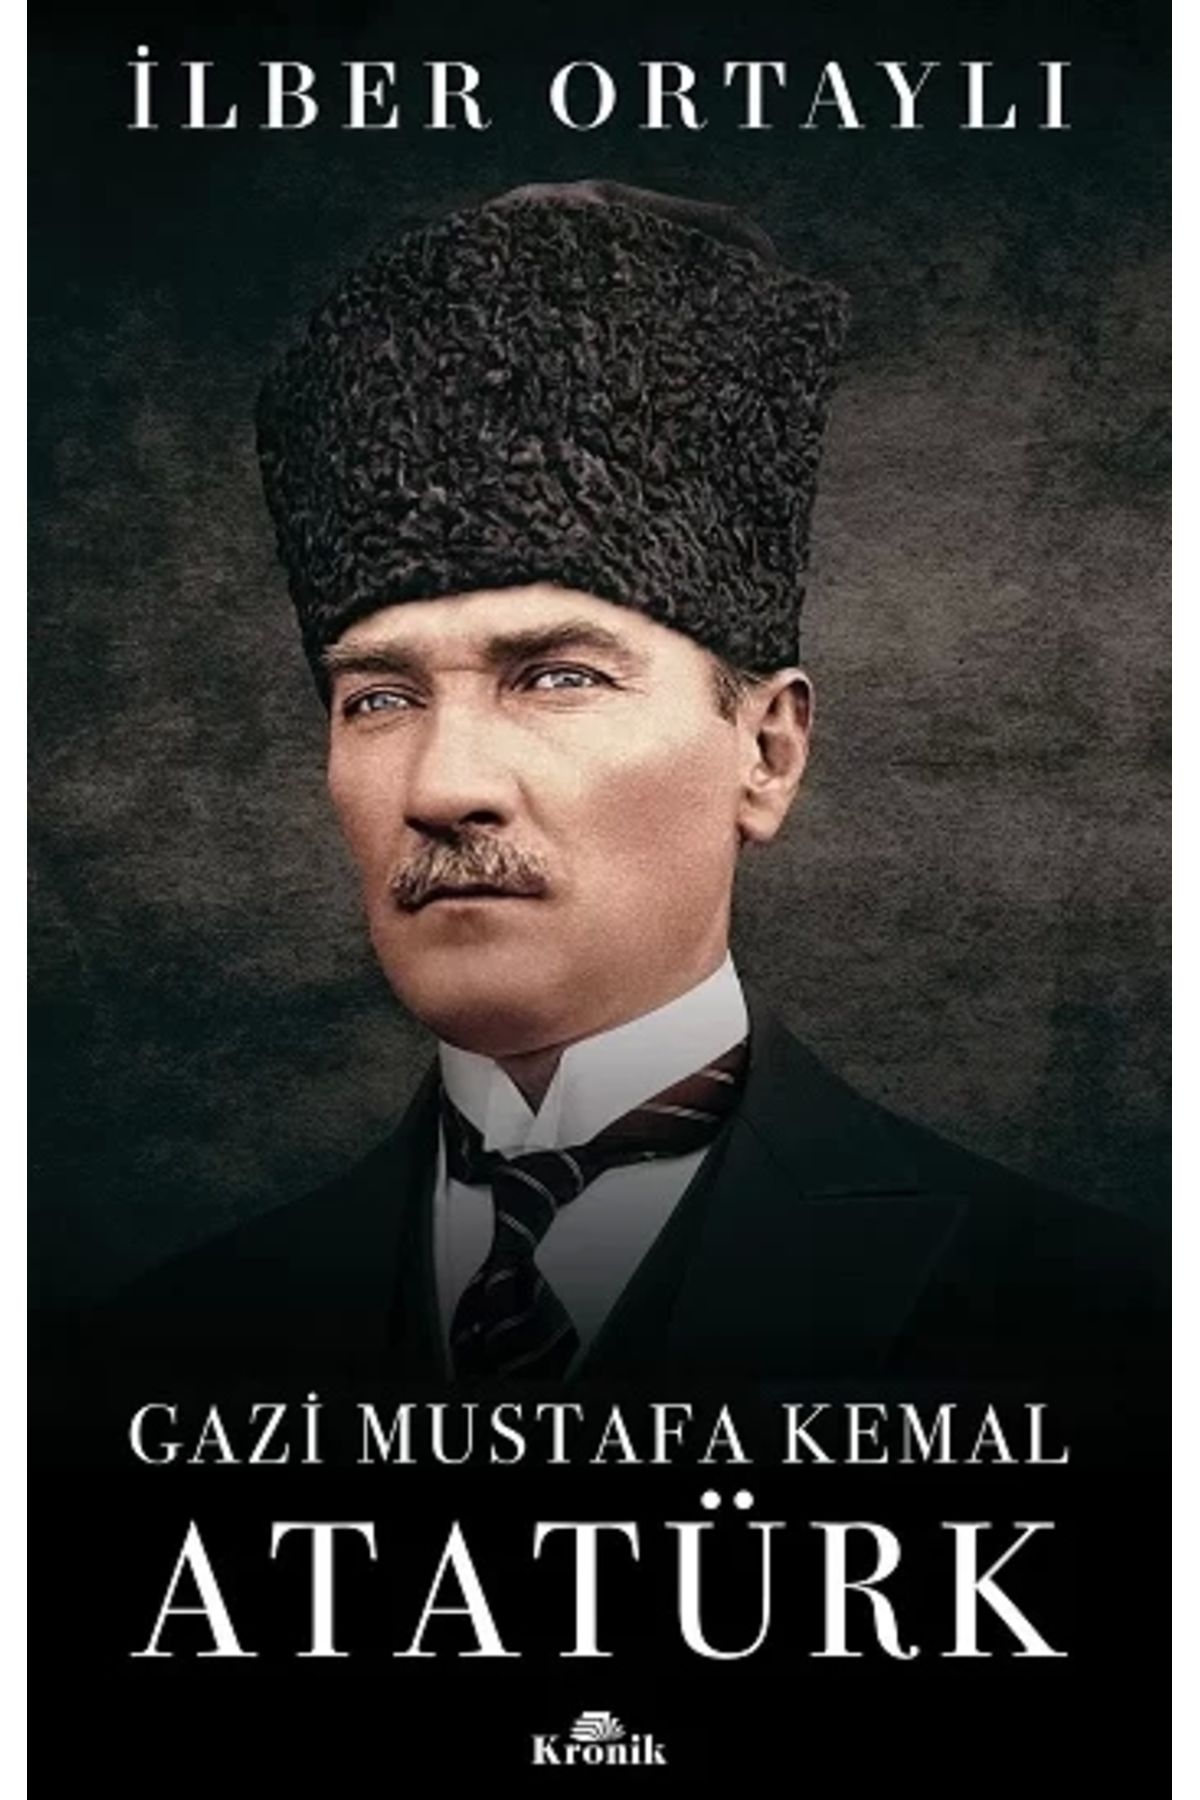 Kronik Kitap Gazi Mustafa Kemal Atatürk